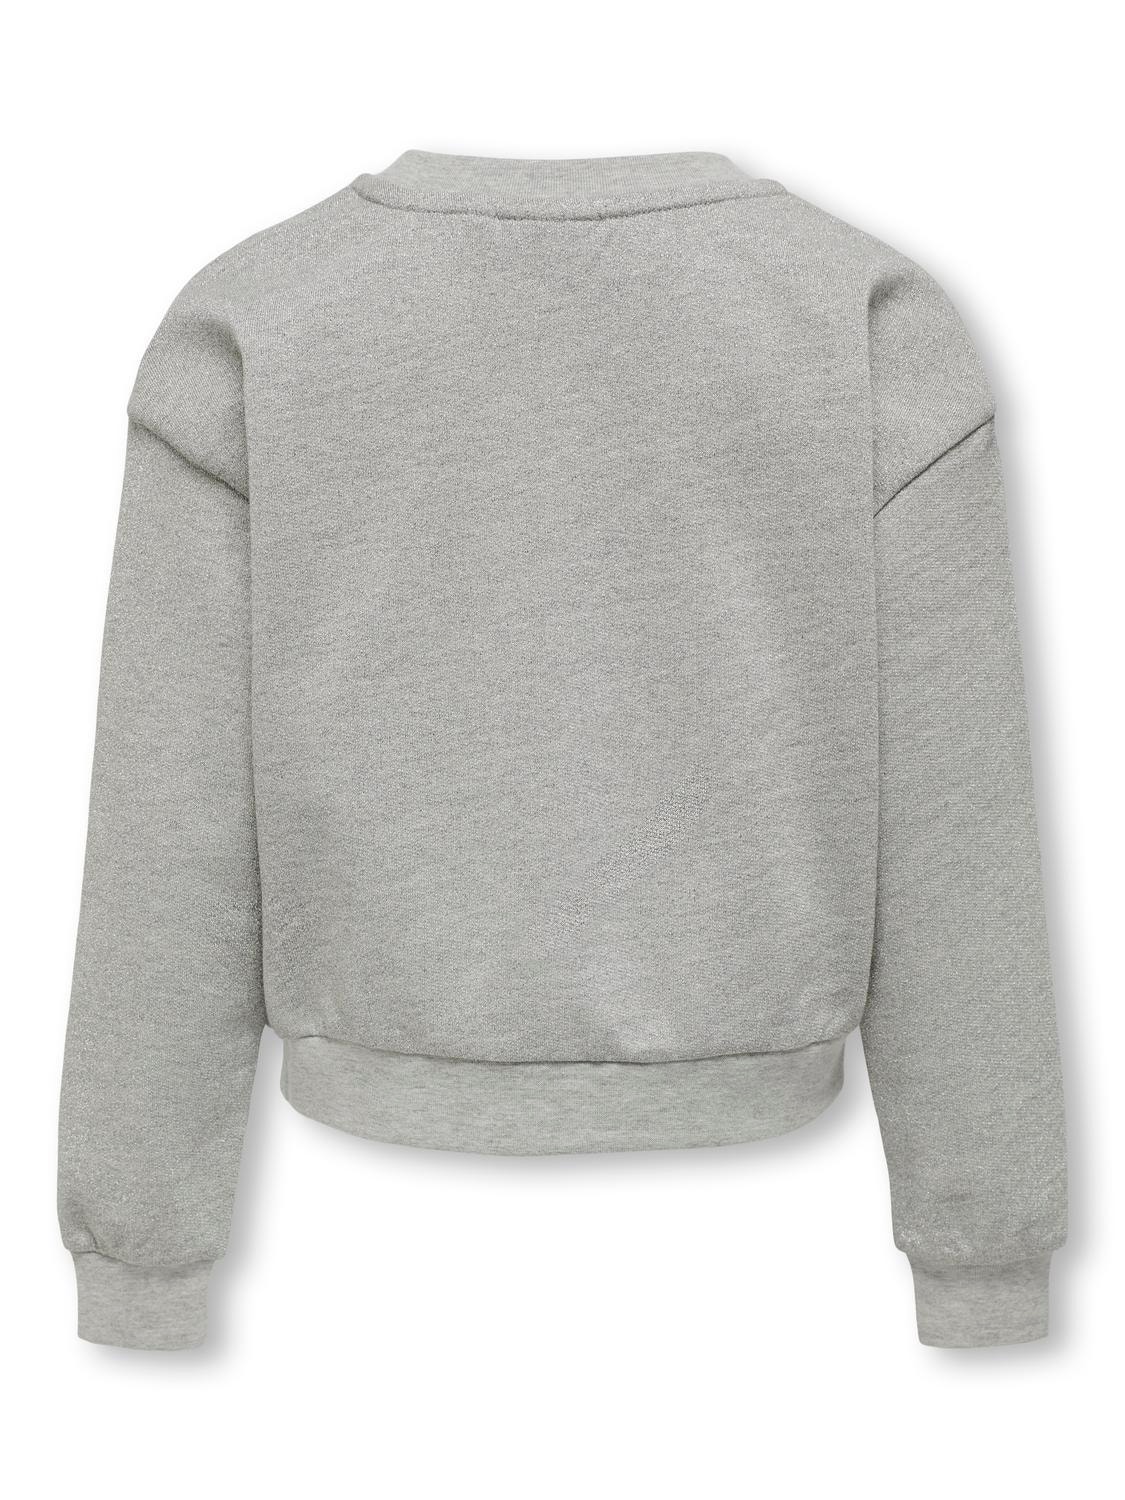 ONLY O-hals sweatshirt -Light Grey Melange - 15307459